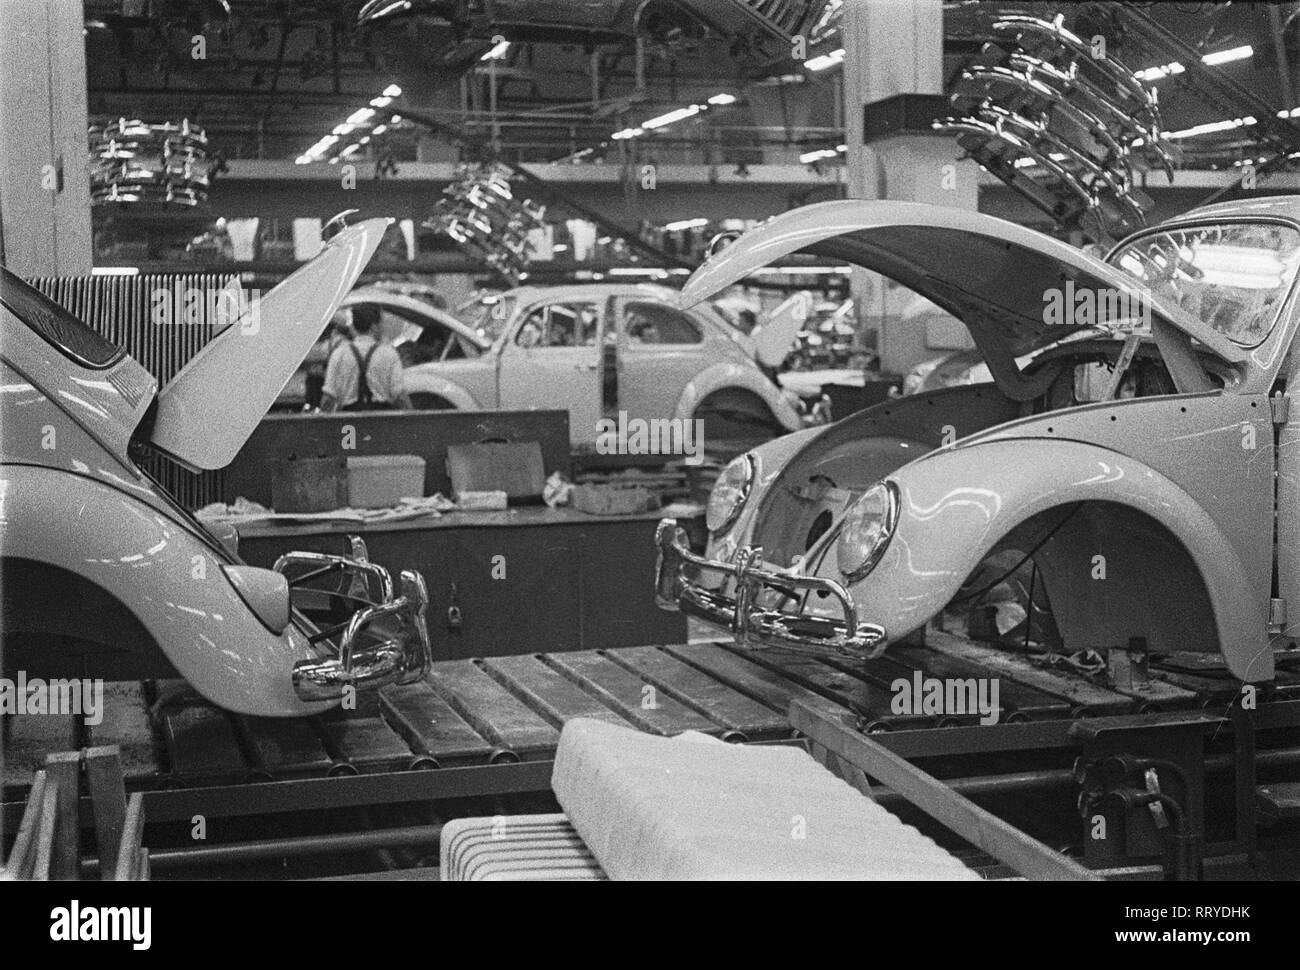 VW Werk 1962 - VW Werk, Wolfsburg, 1962. VW Käfer Fertigung. Montagefließband Volkswagen Factory in Wolfsburg/Germany, 1962. VW Beetle production, assembly lines Stock Photo